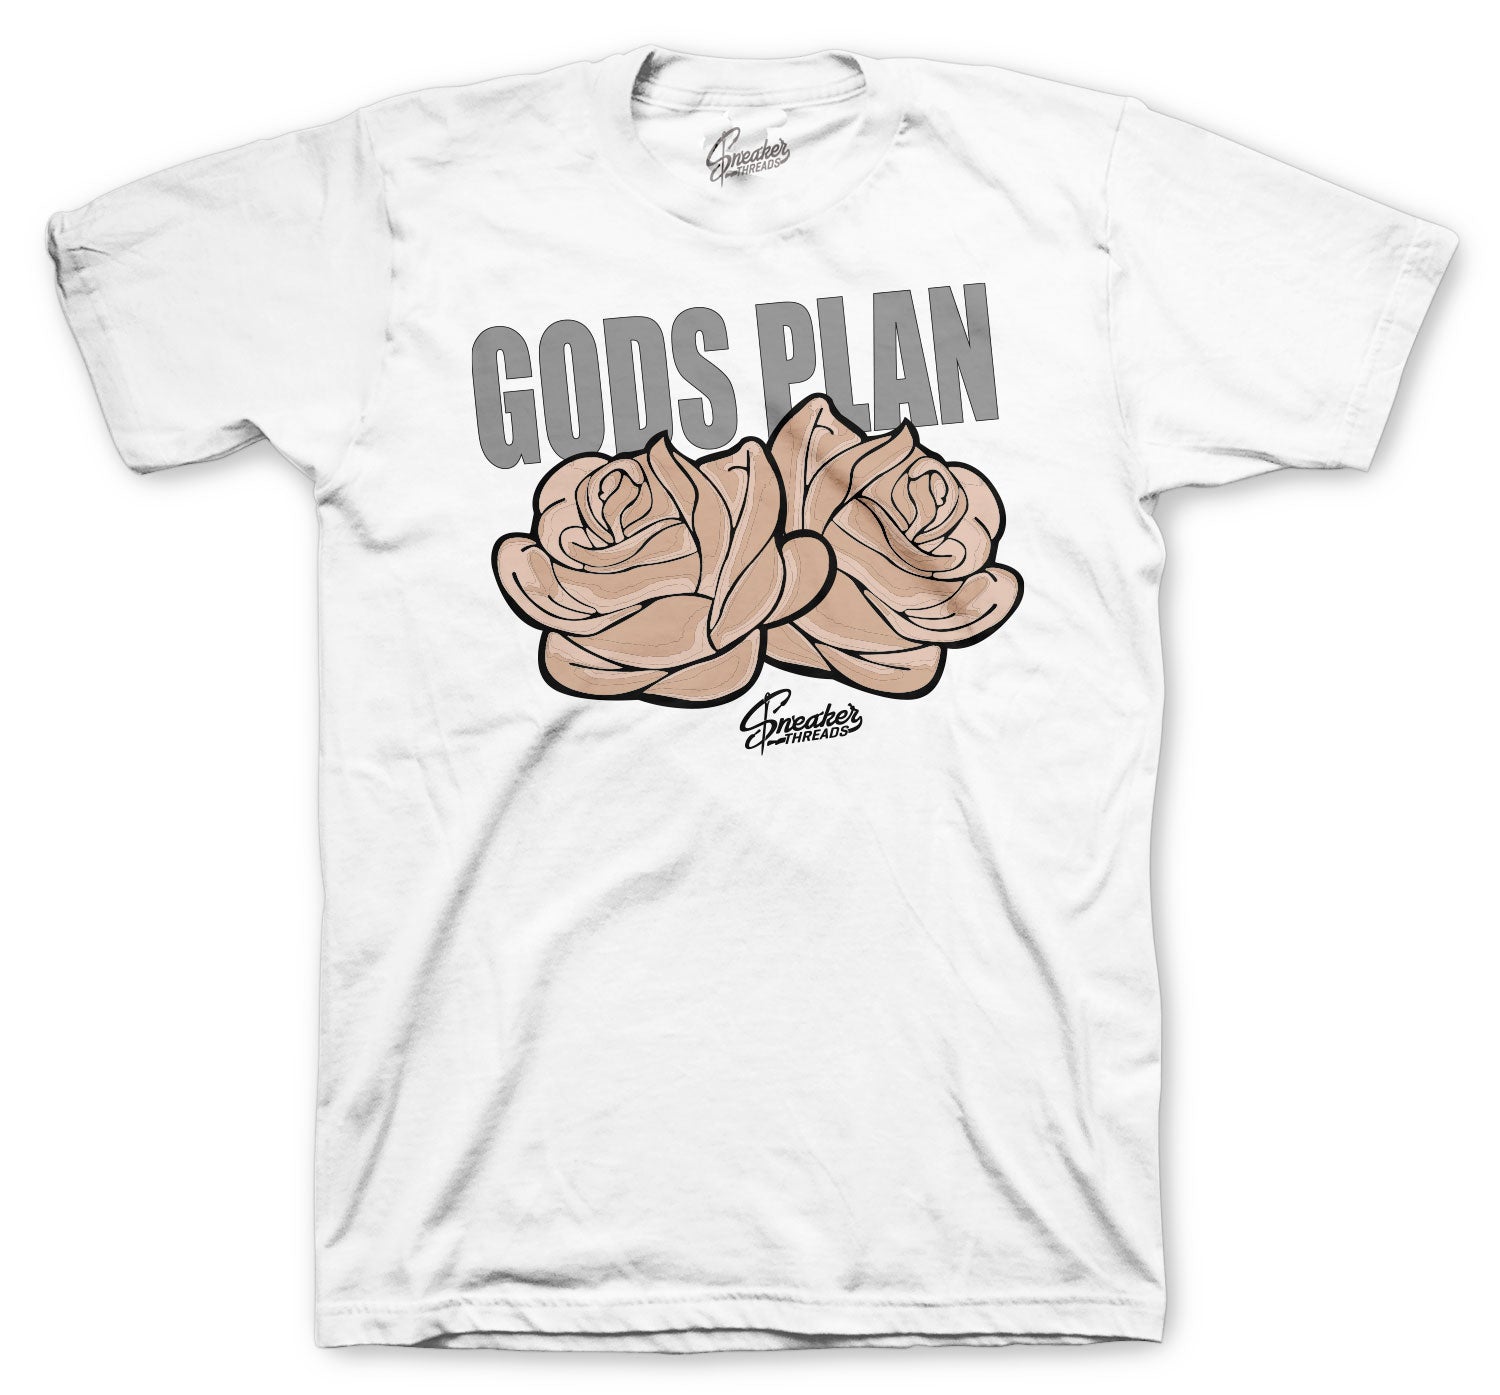 Retro 4 Shimmer Shirt - Gods Plan - White